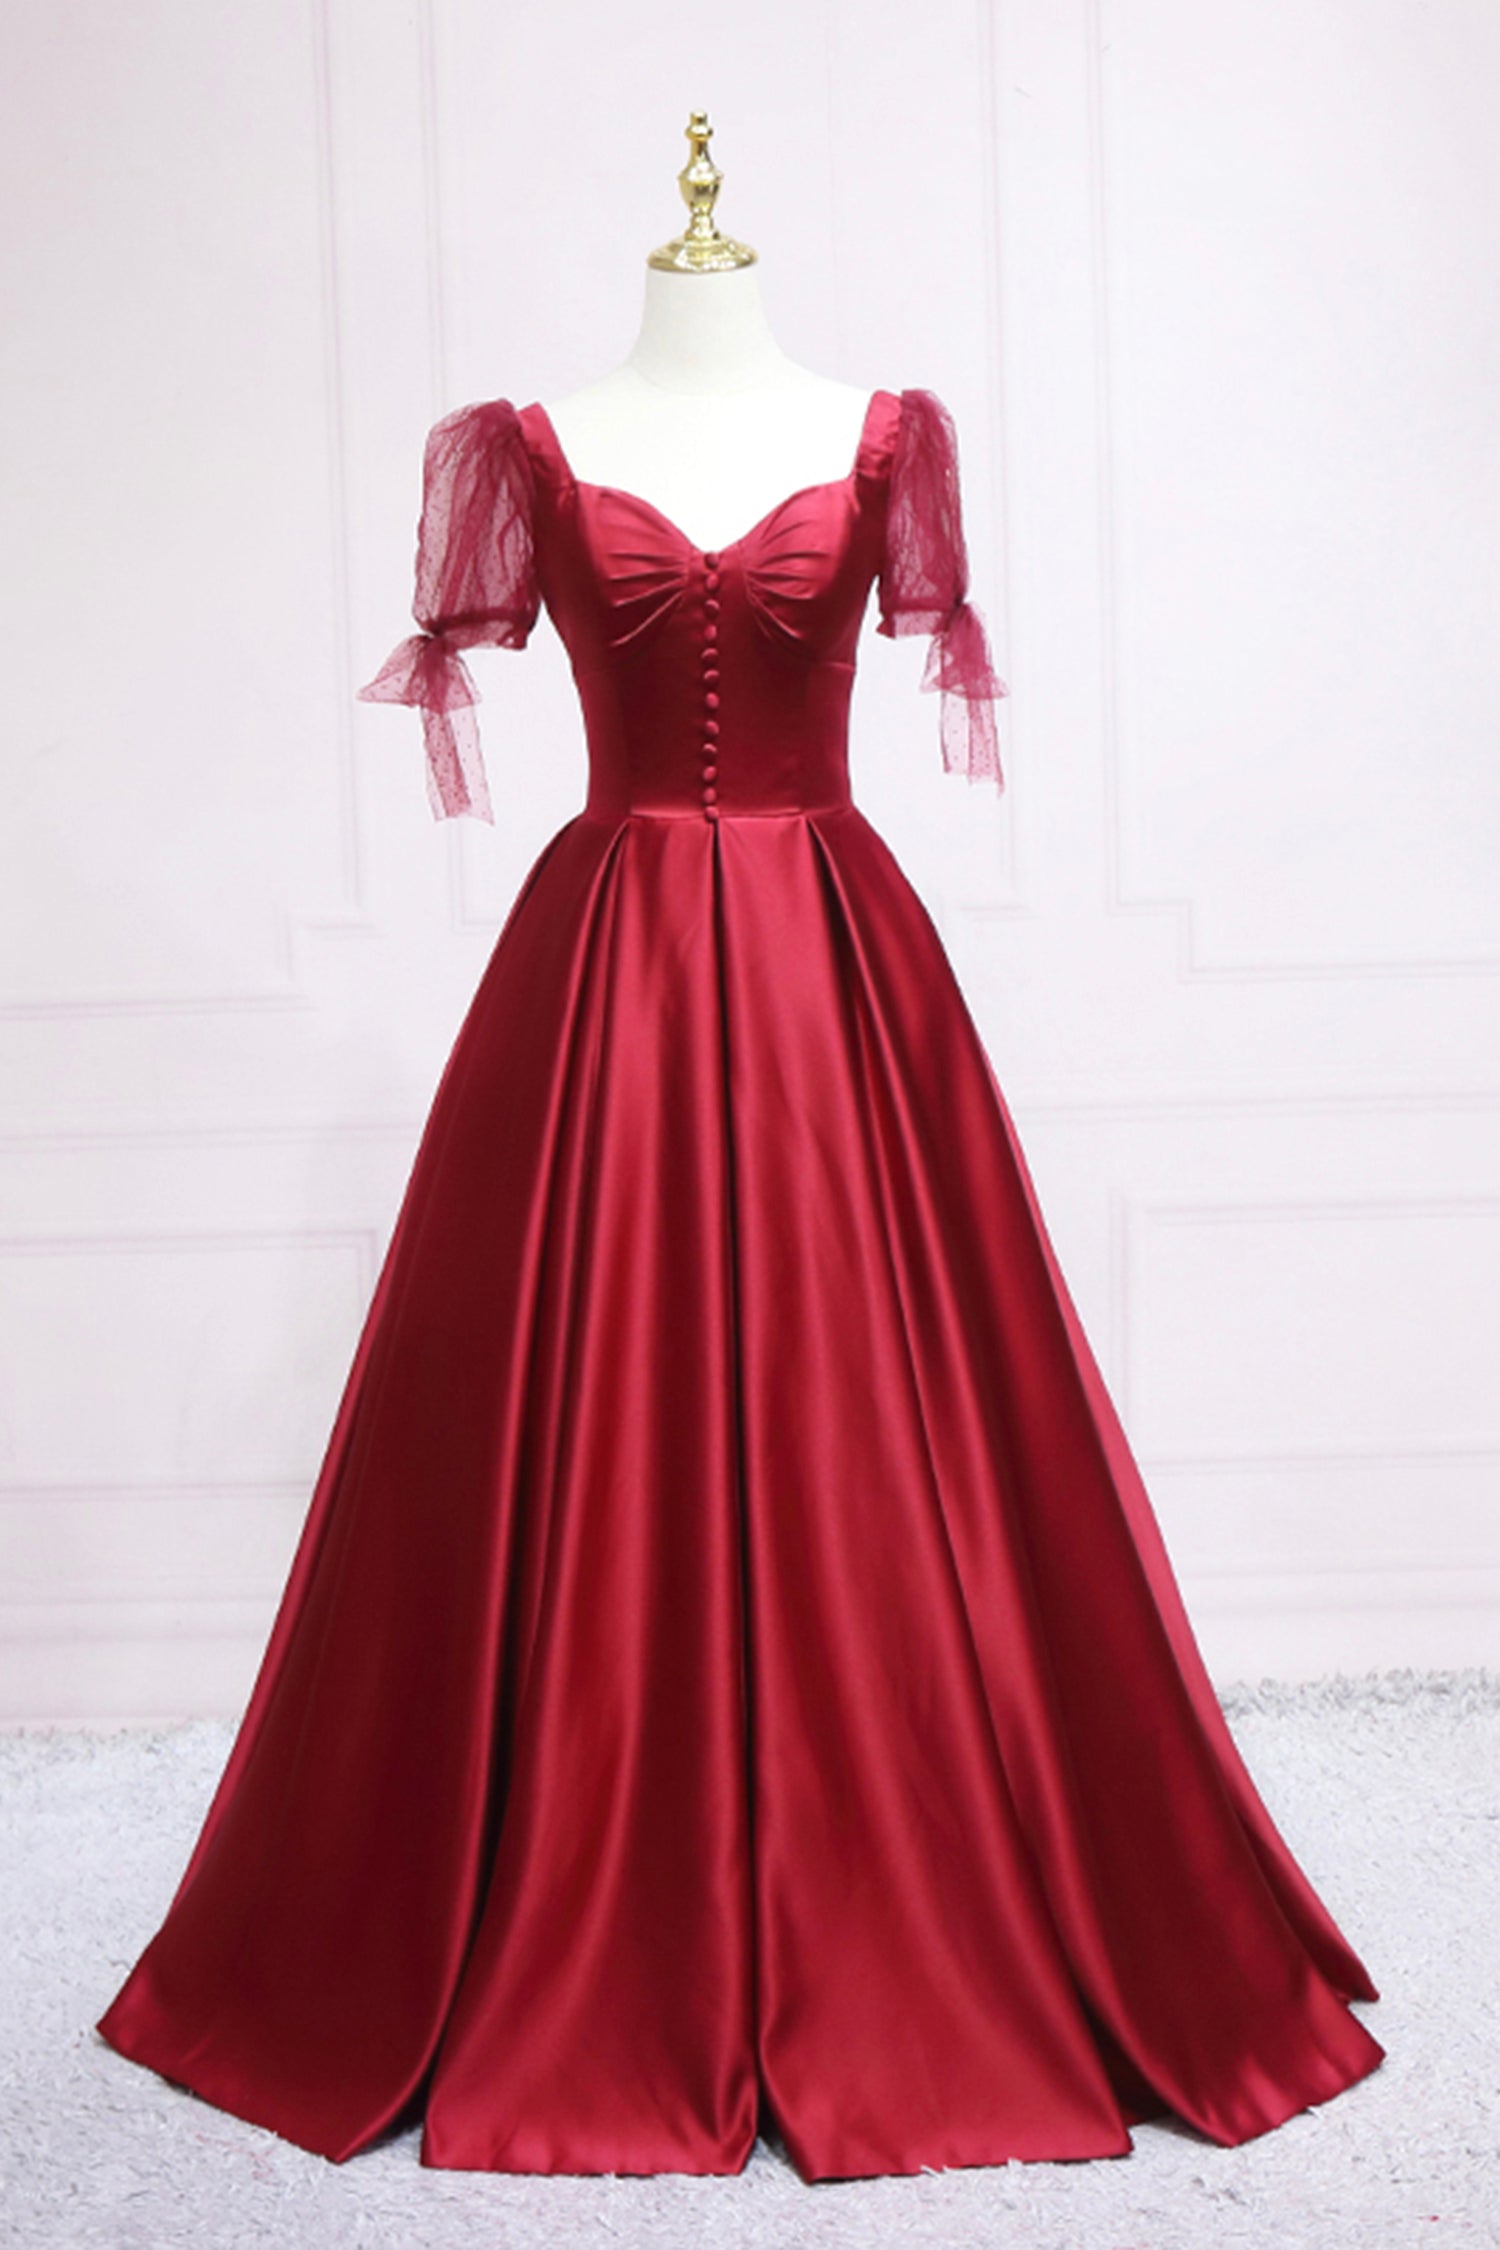 Party Dresses Design, Red Satin Sweetheart Neckline Long Formal Dress, A-Line Evening Graduation Dress